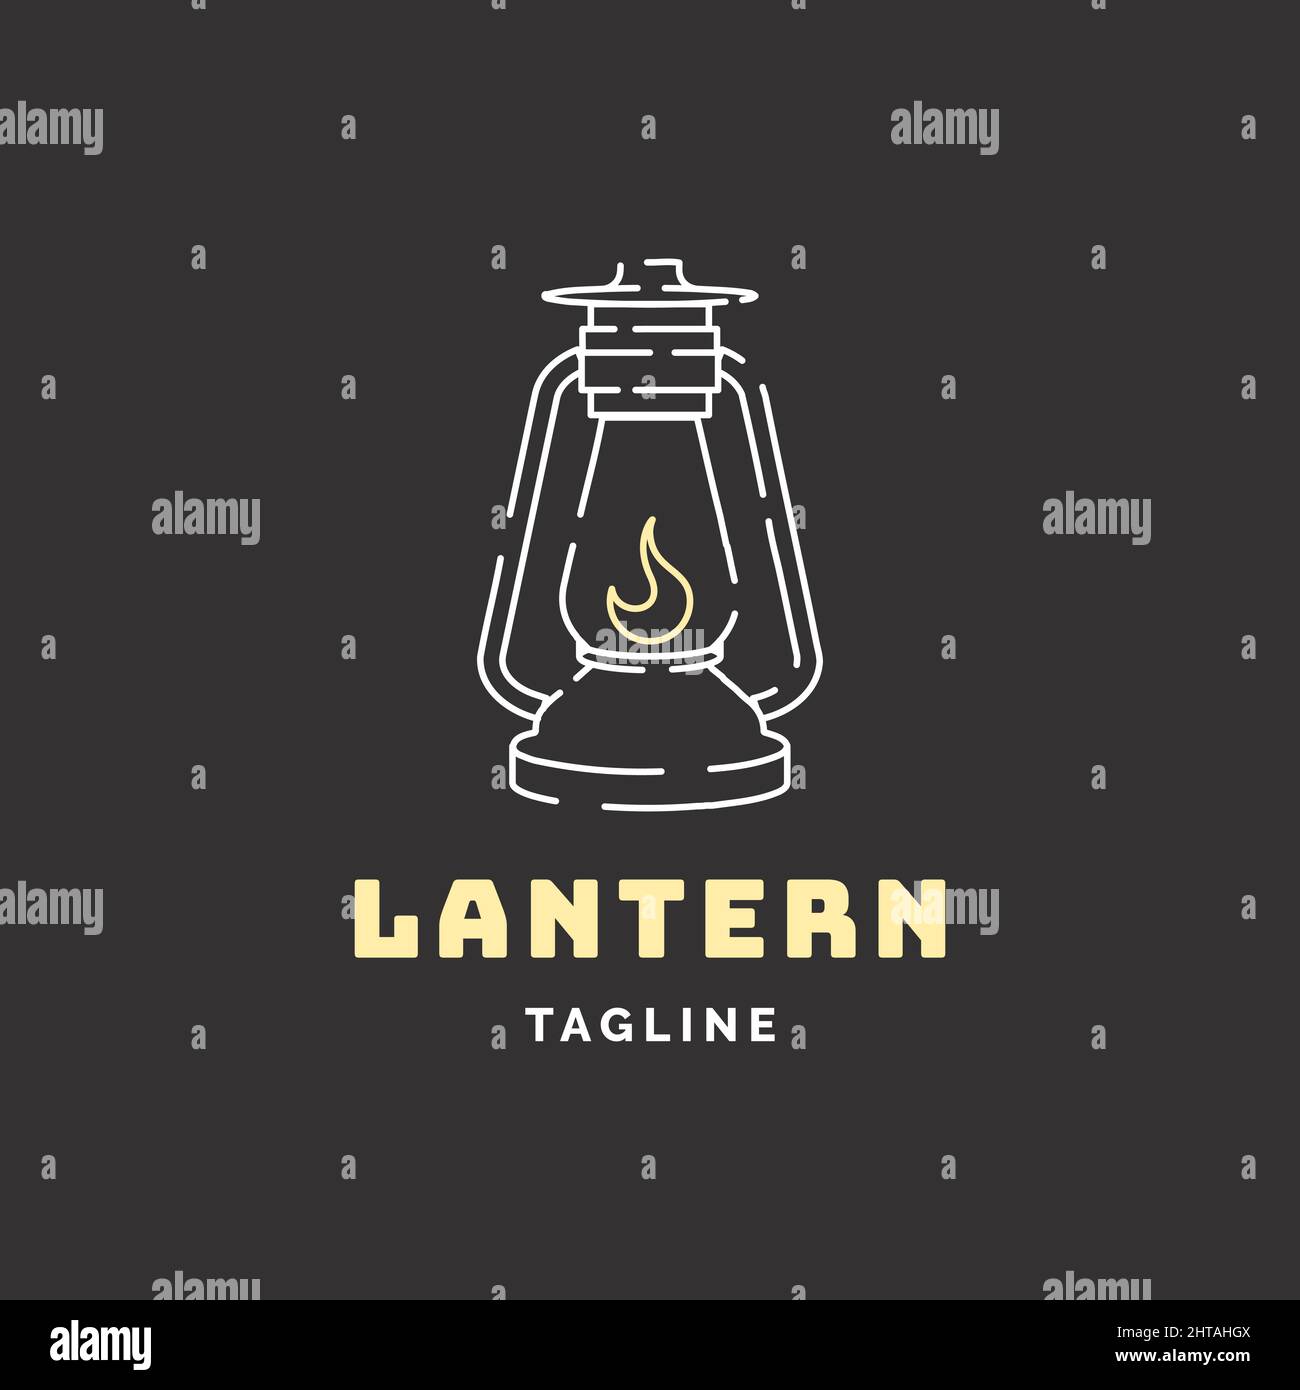 Lantern logo design illustration vector template Stock Vector